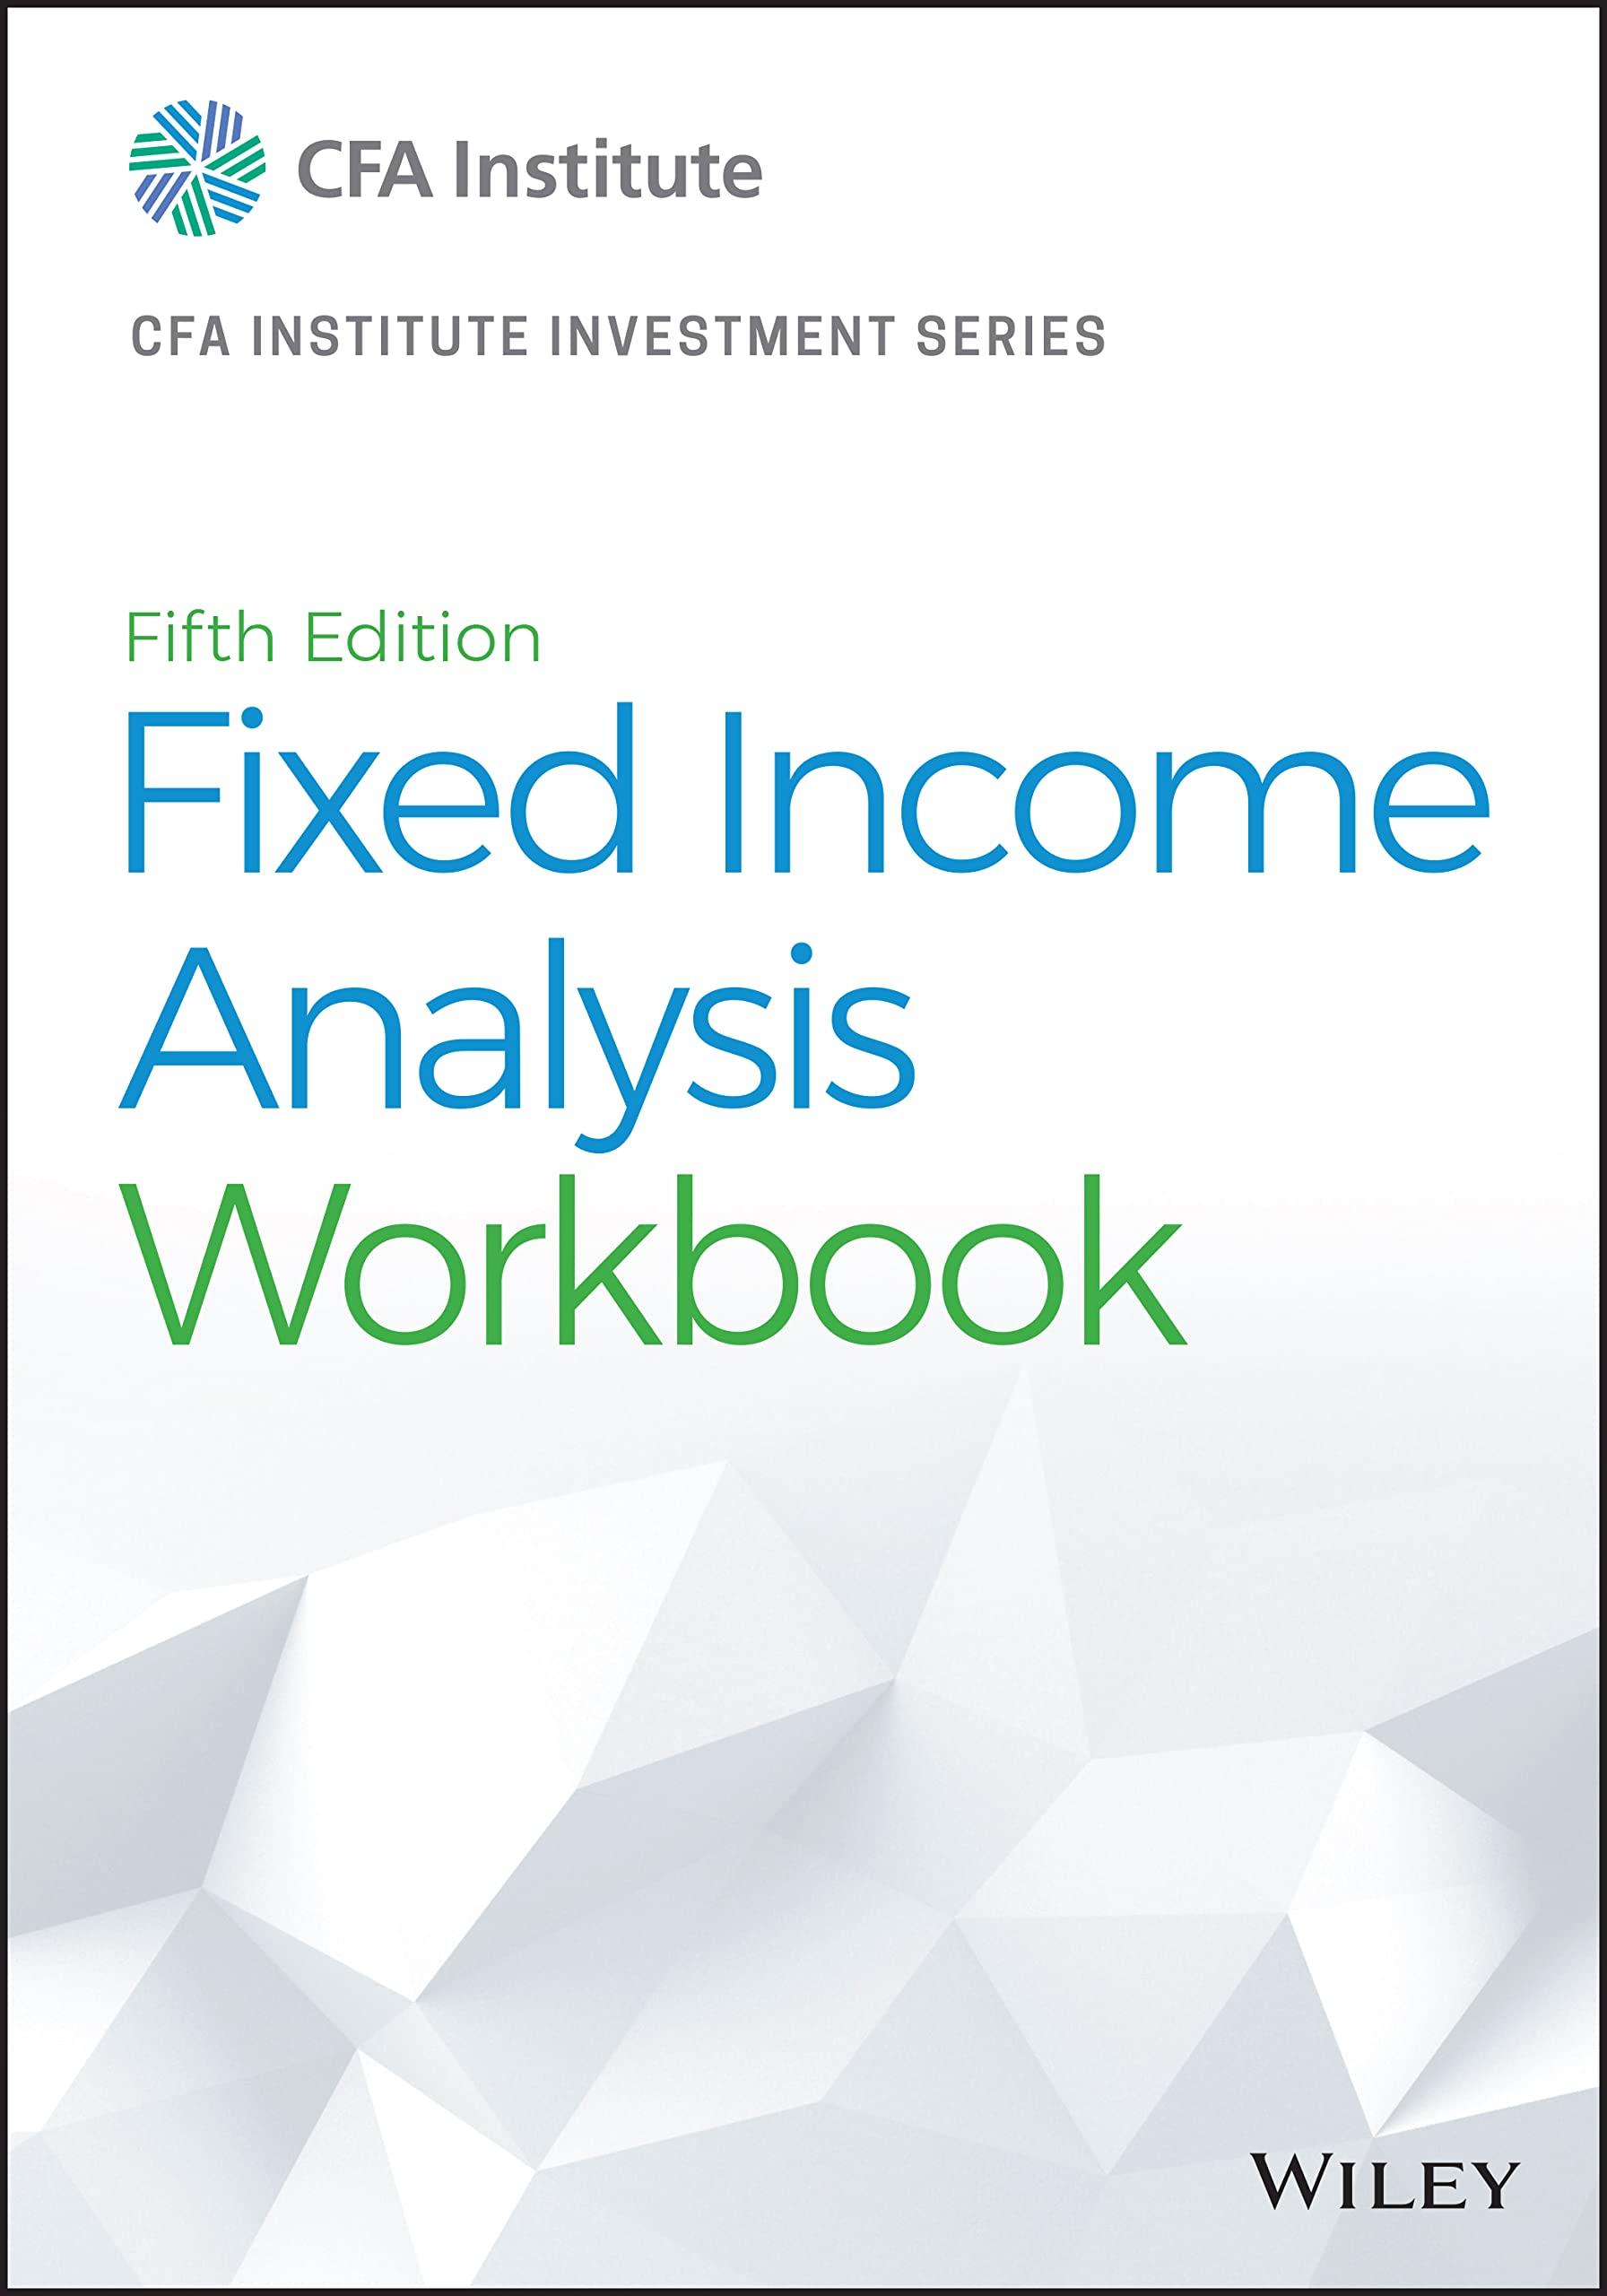 fixed income analysis workbook cfa institute investment series 5th edition barbara s. petitt 1119852994,